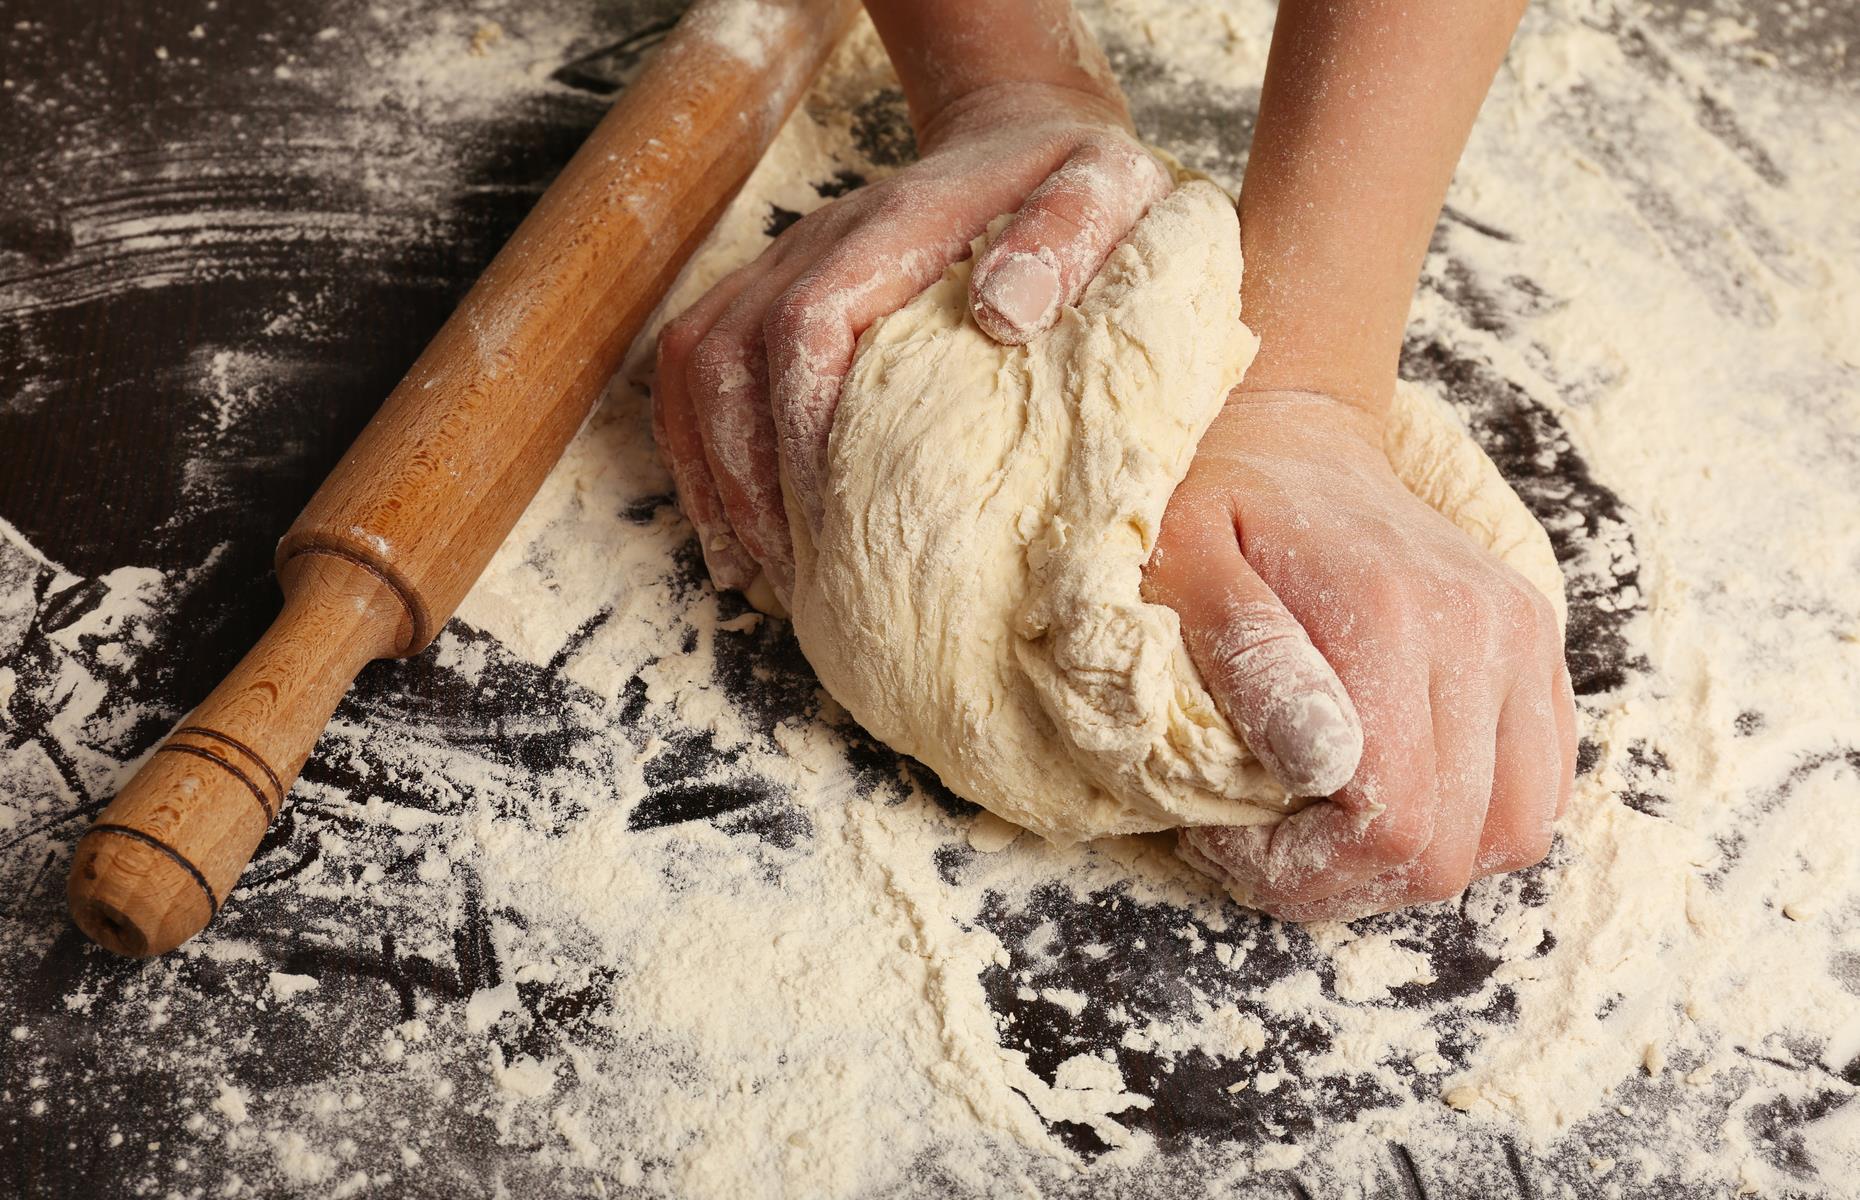 Kneading bread (Image: Africa Studio/Shutterstock)